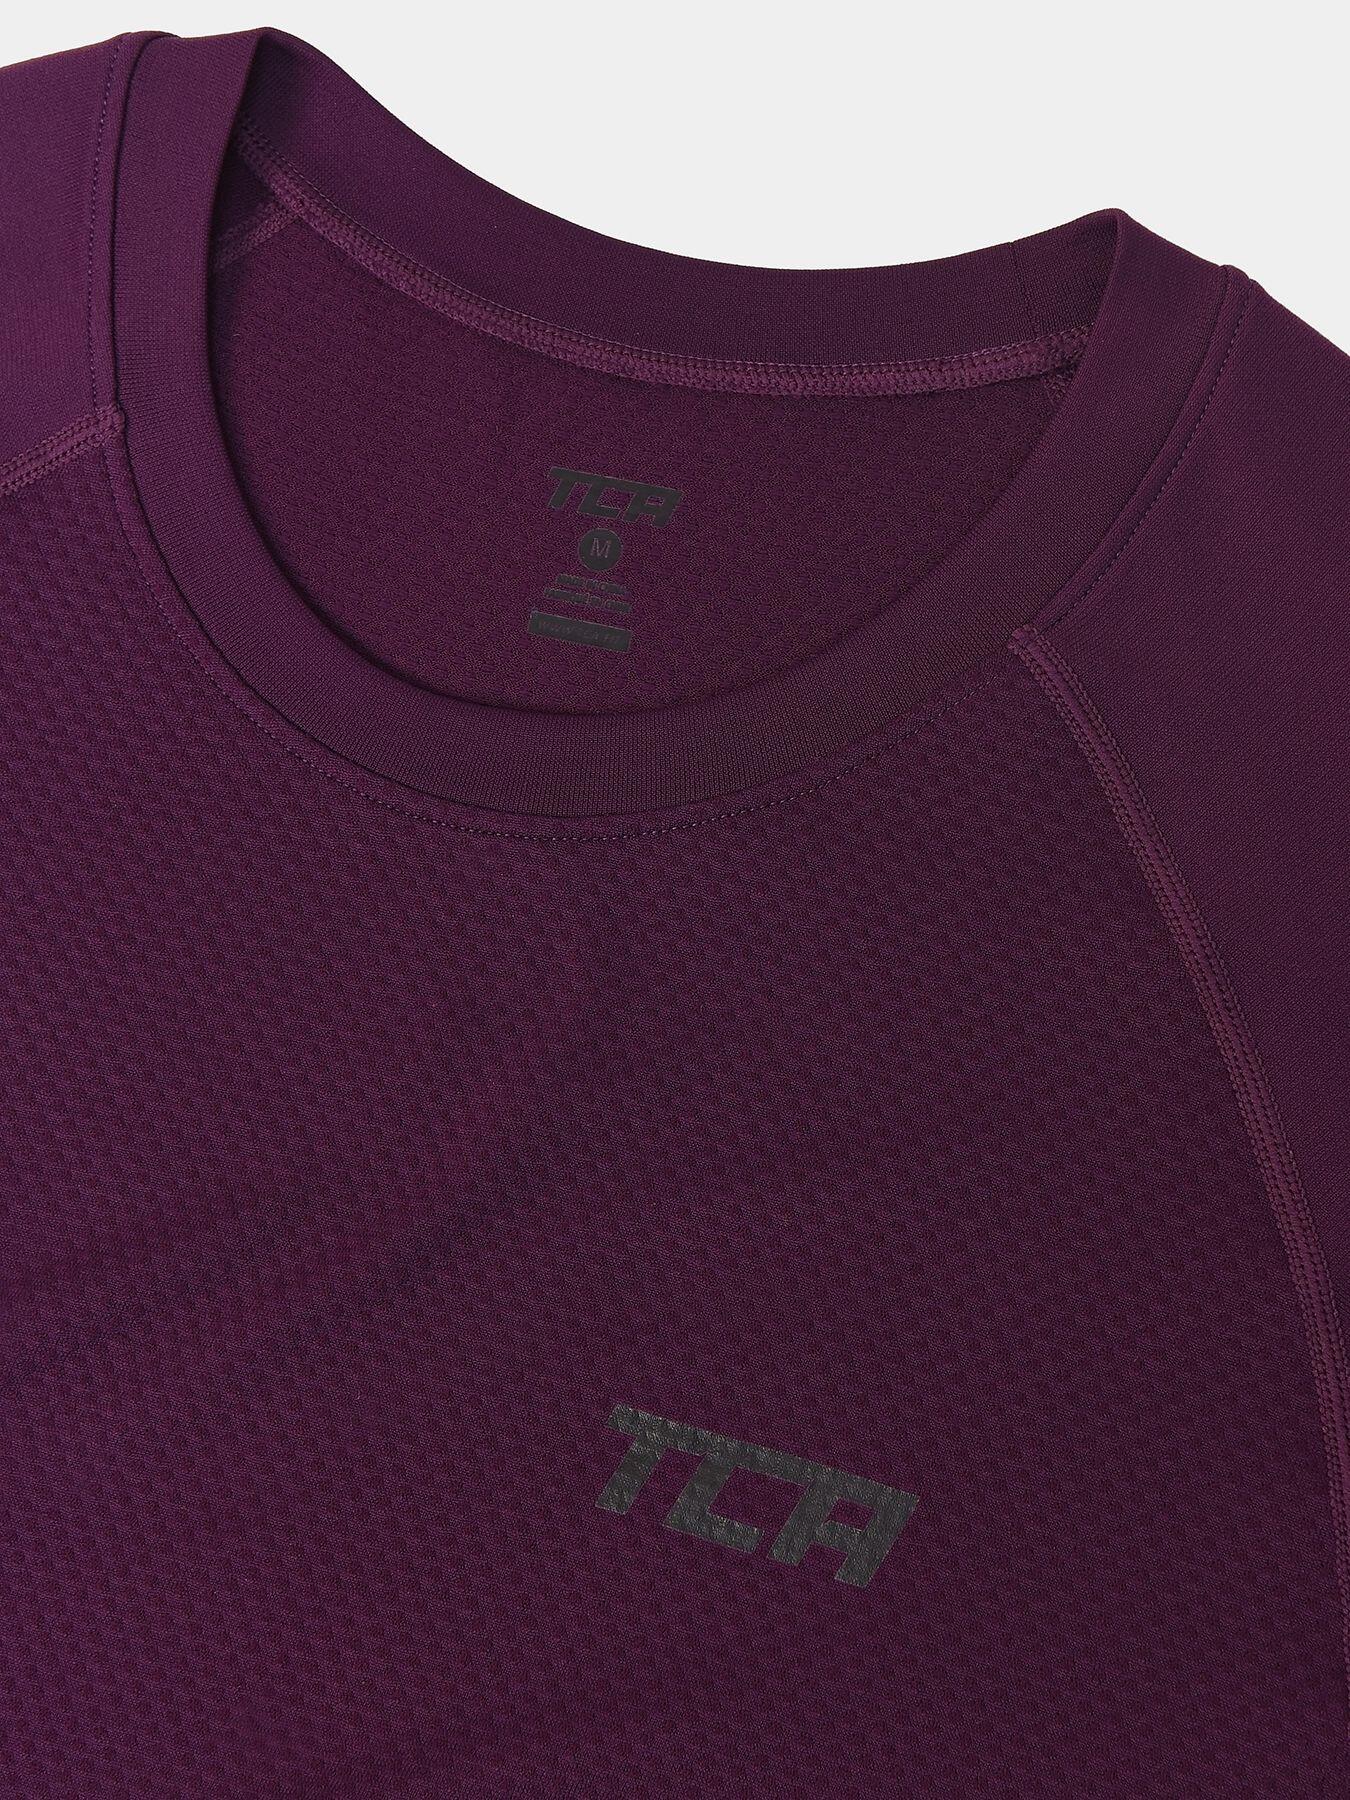 Men's Superknit Breathable Running Gym T-Shirt - Purple 3/5